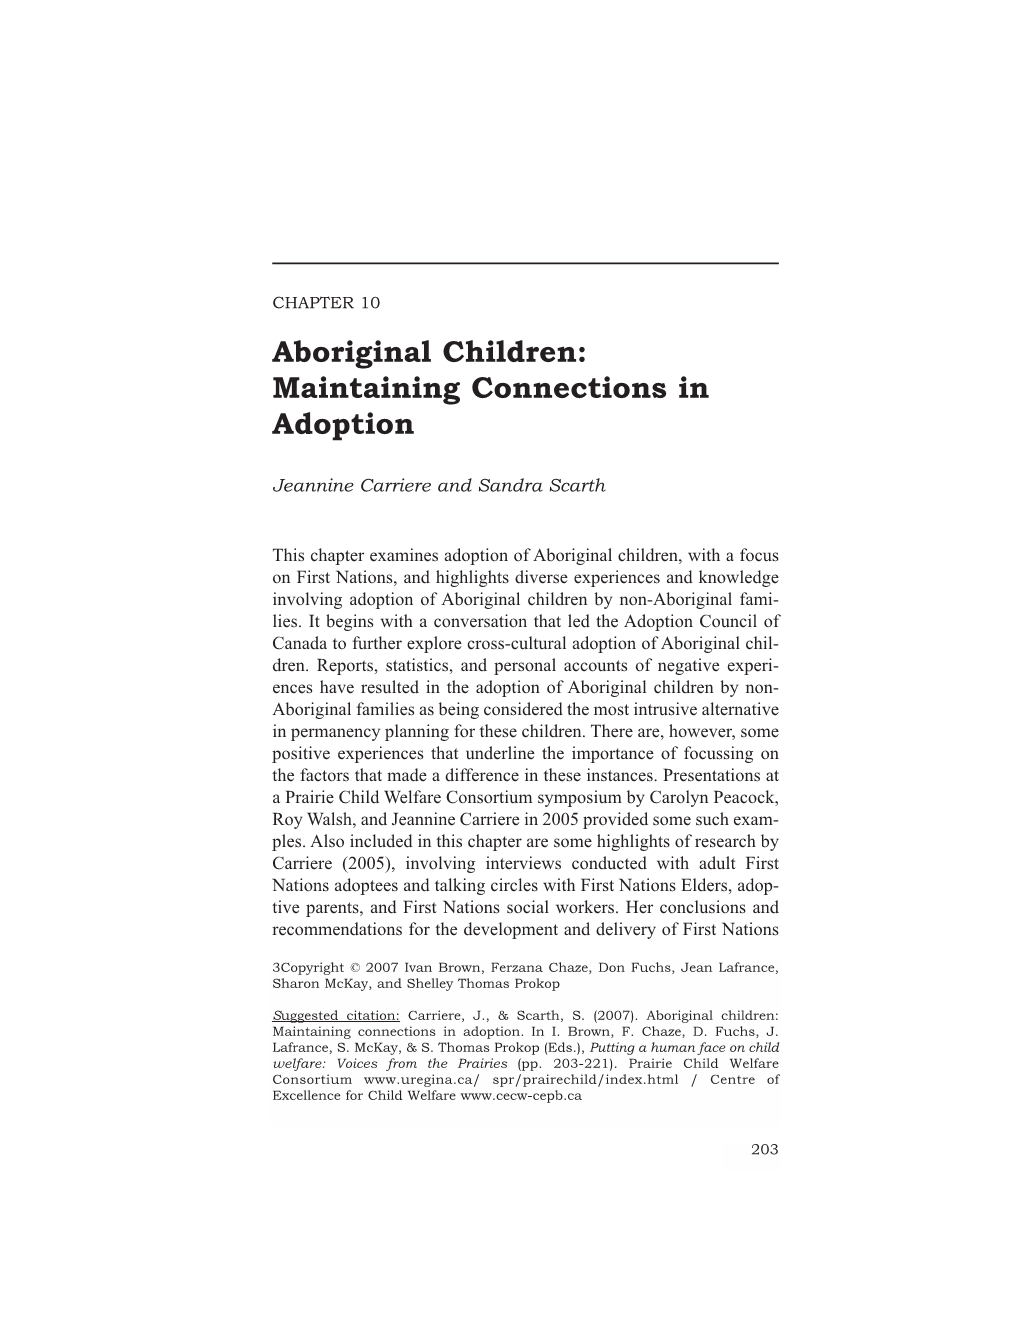 Aboriginal Children: Maintaining Connections in Adoption